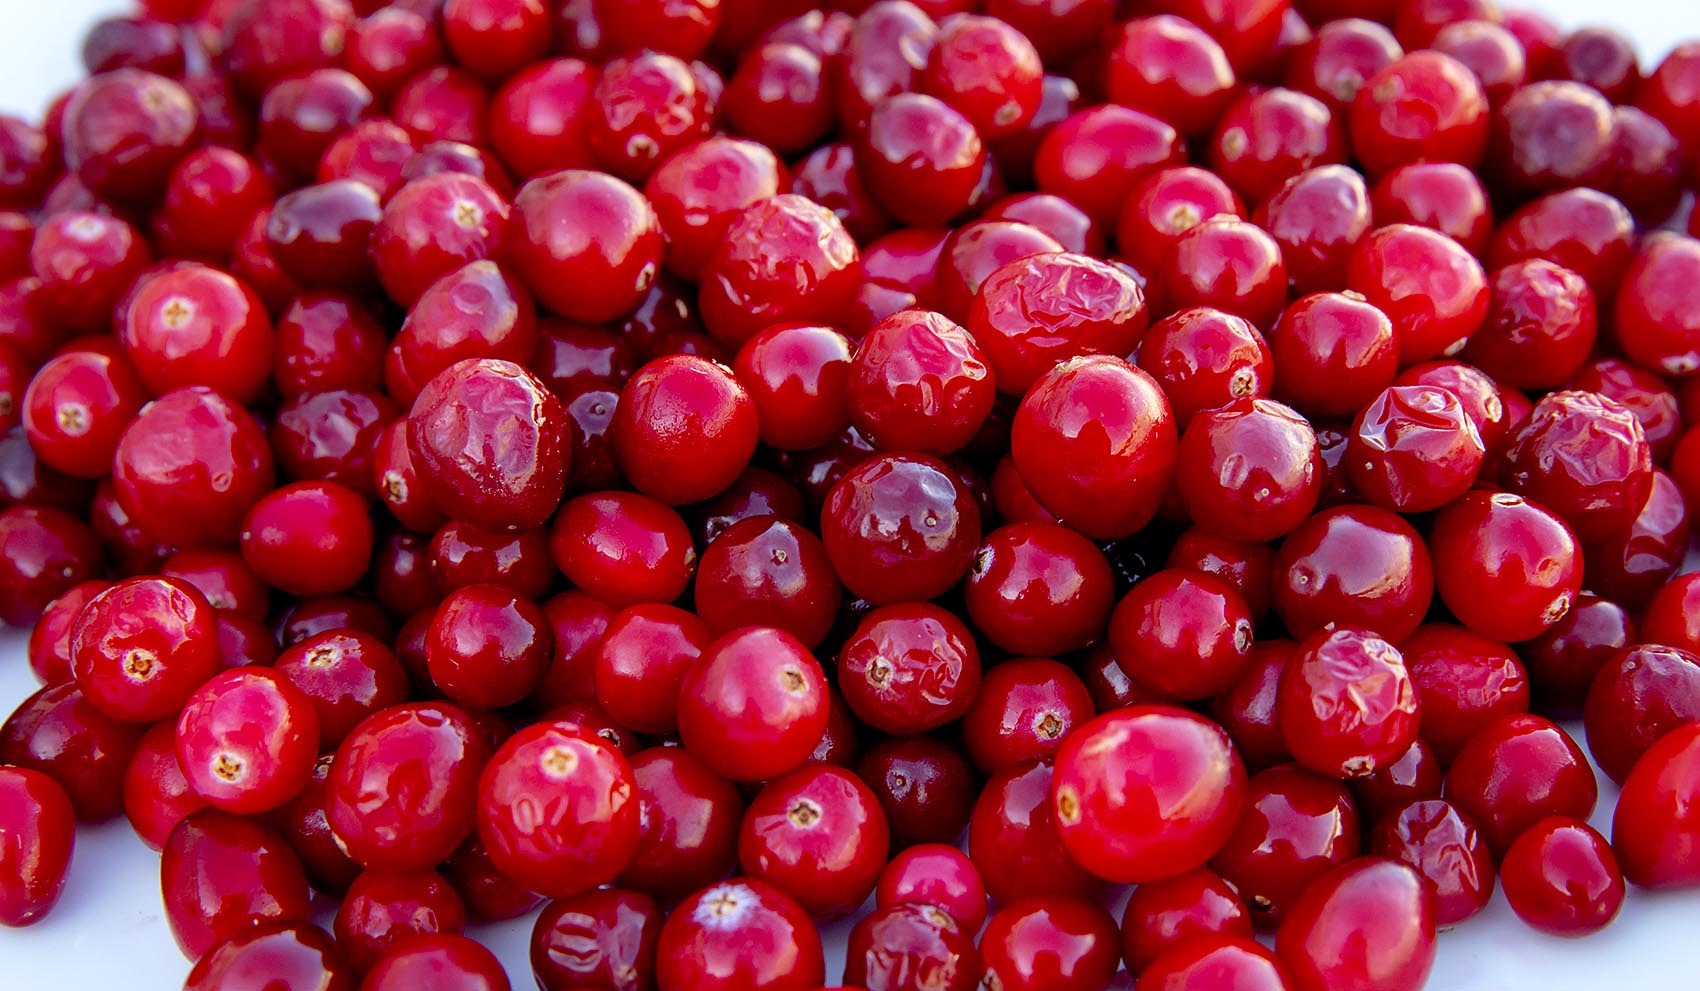 Health benefits of Cranberry